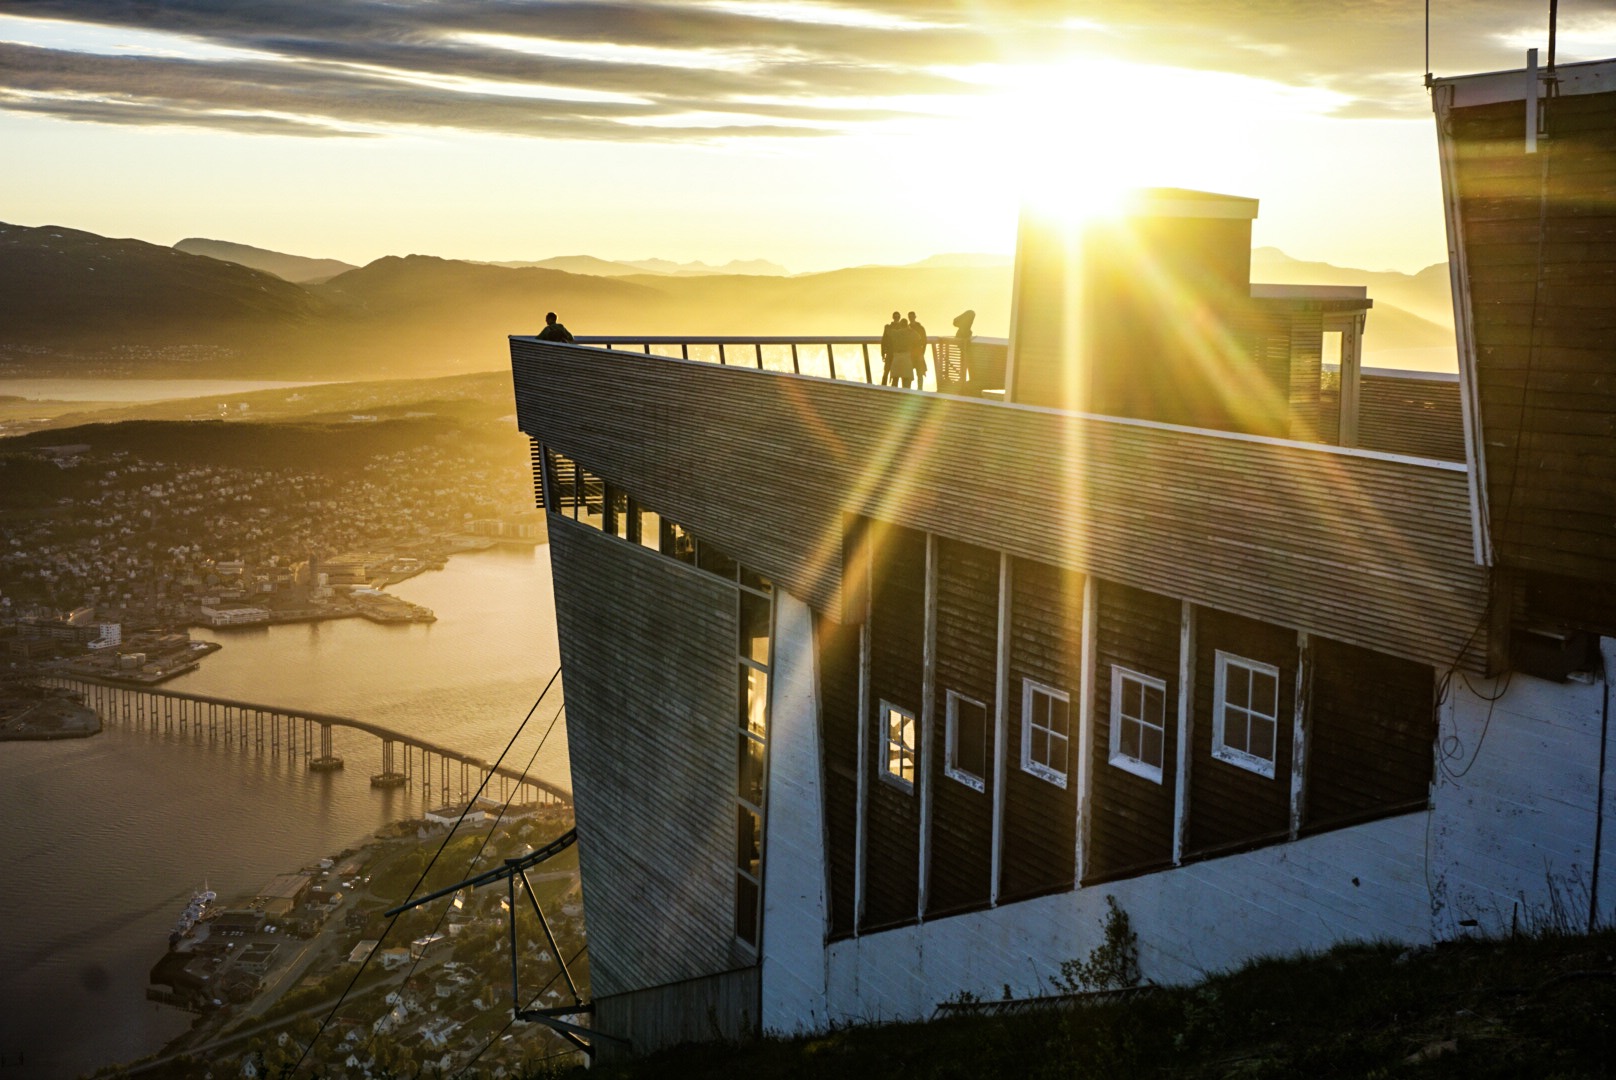 The Midnight Sun viewed from Tromsø's Cable Car, Fjellheisen © Knut Hansvold